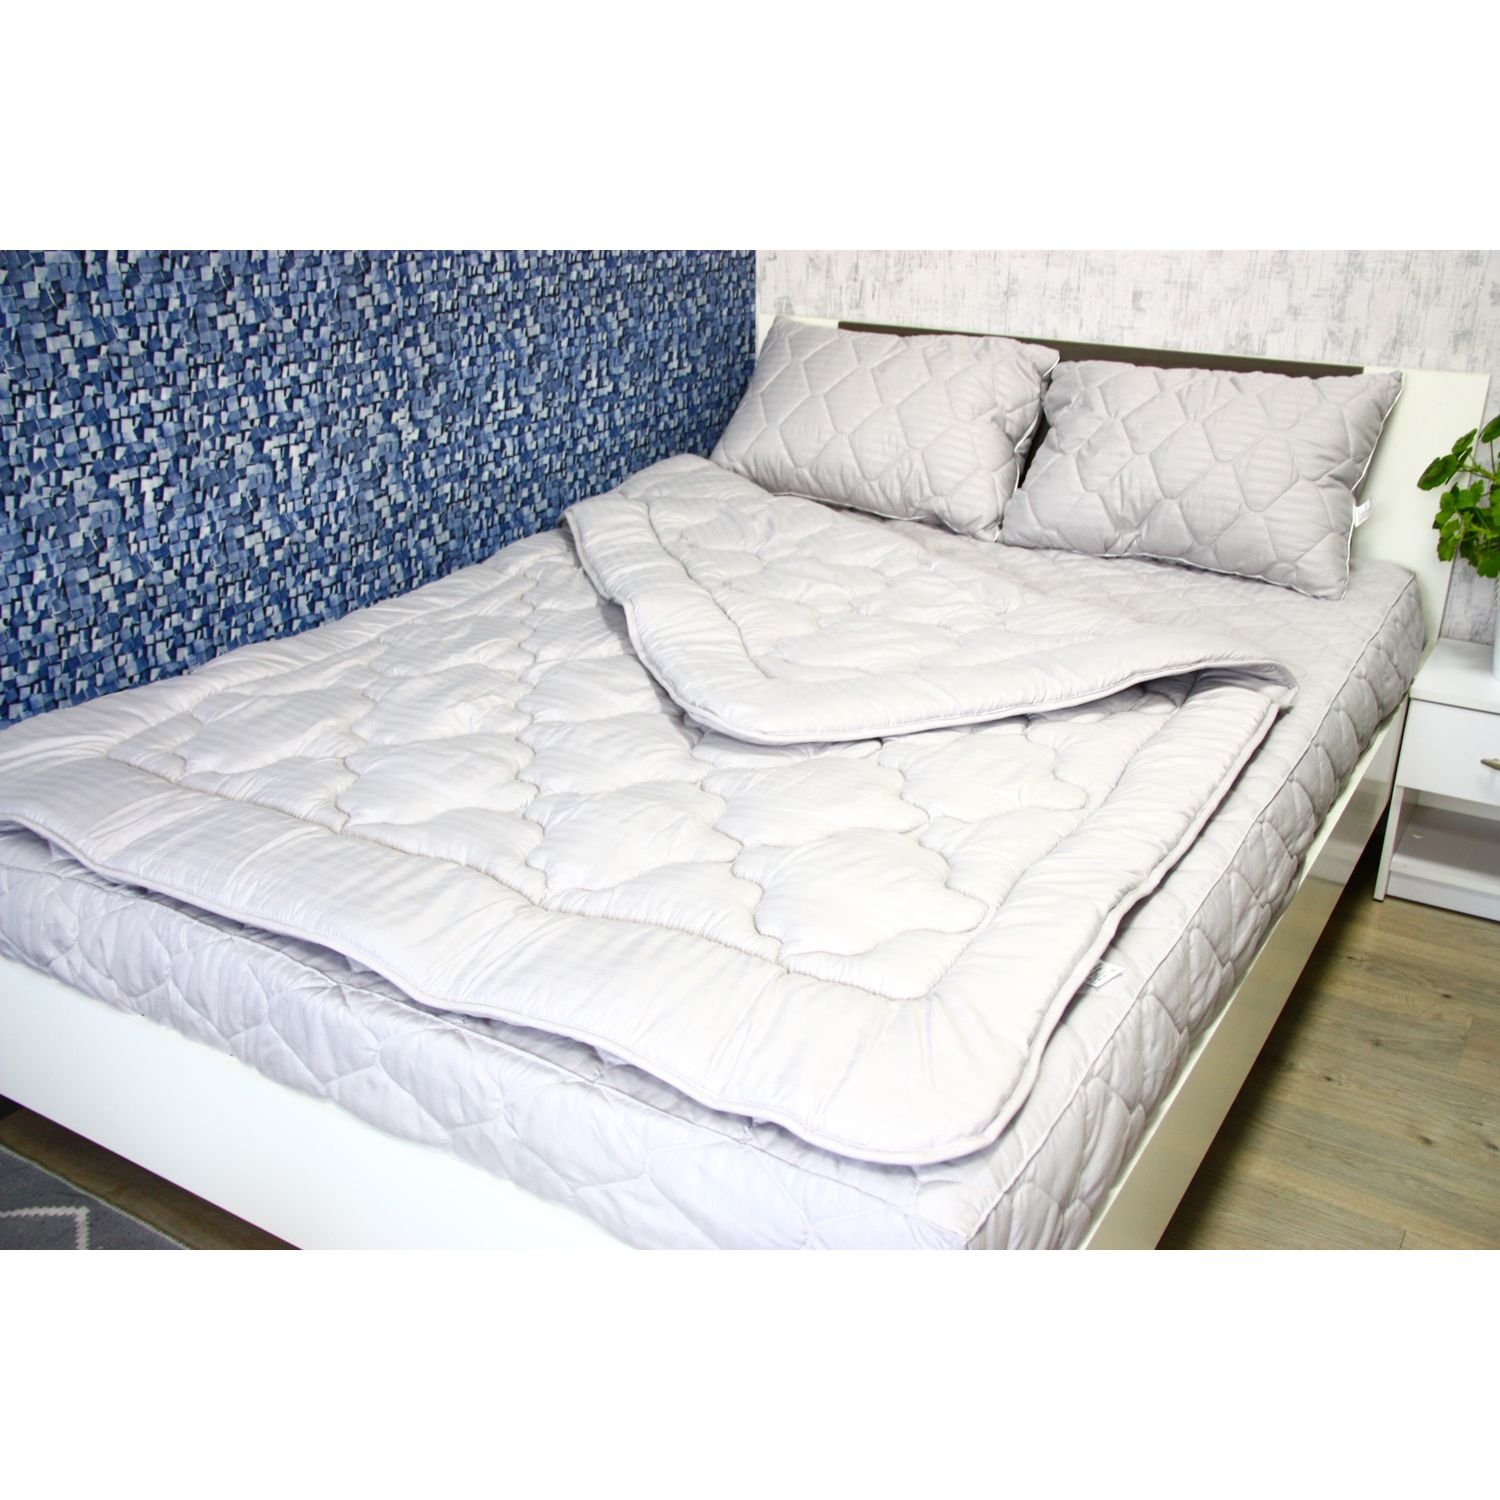 Одеяло LightHouse Soft Line Mf Stripe grey, 140х210 см, серое (602244) - фото 9